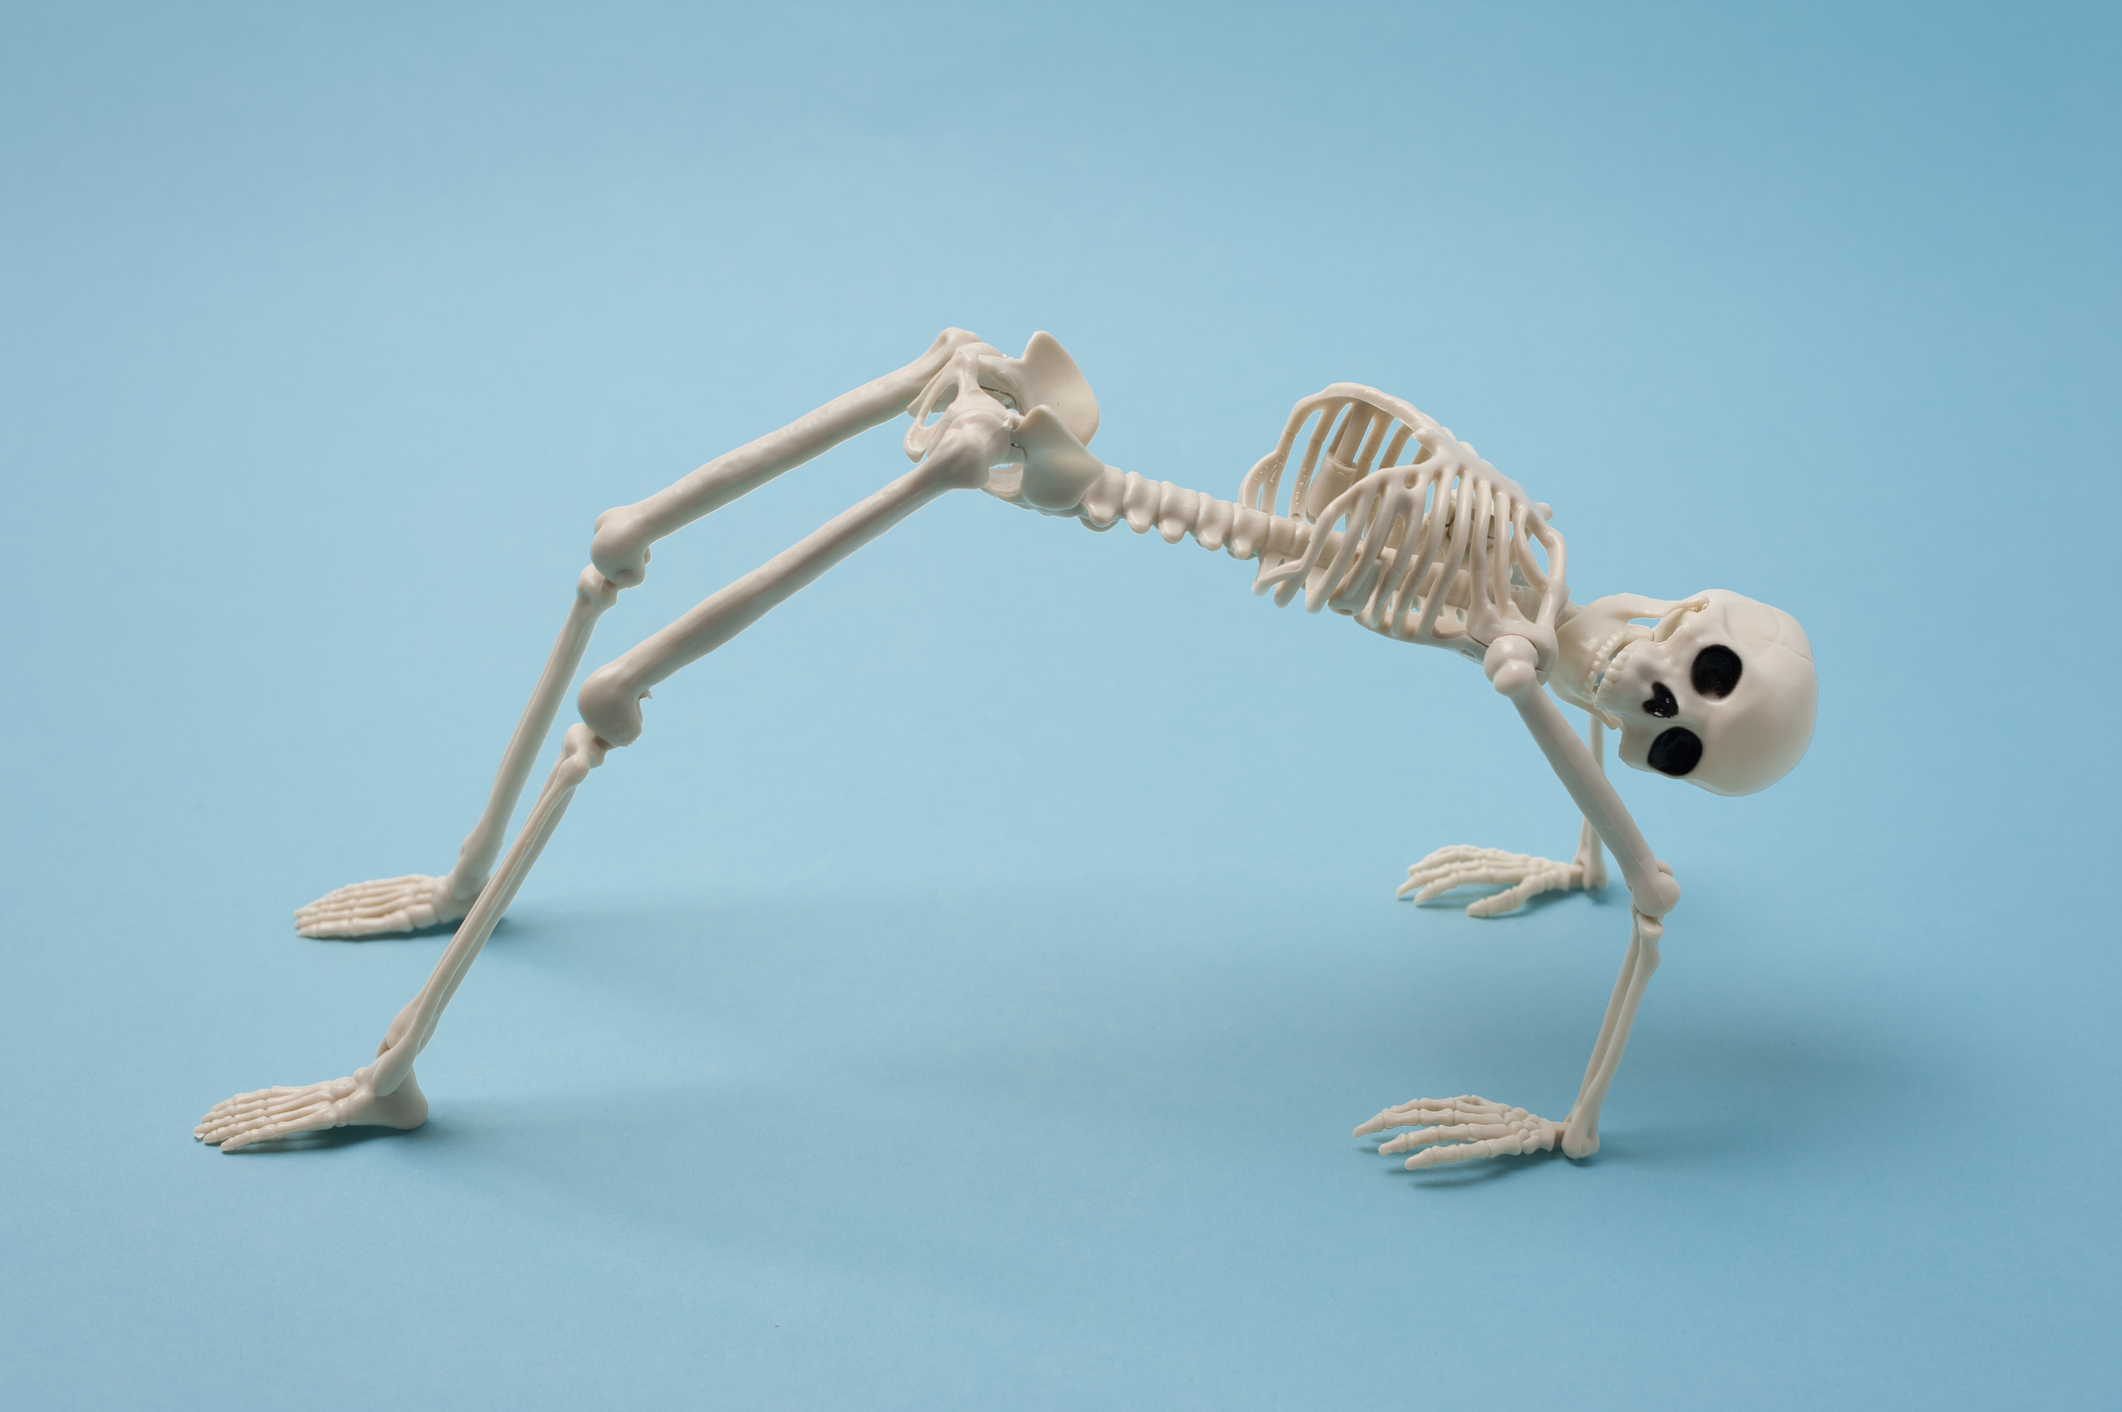 https://images.ctfassets.net/cnu0m8re1exe/25eJYRXi1c3jpyyKkx1rB9/4f4d5d85457d775ae62cba56c037ef67/Human-Skeleton-Fun-Facts-How-Many-Bones.jpg